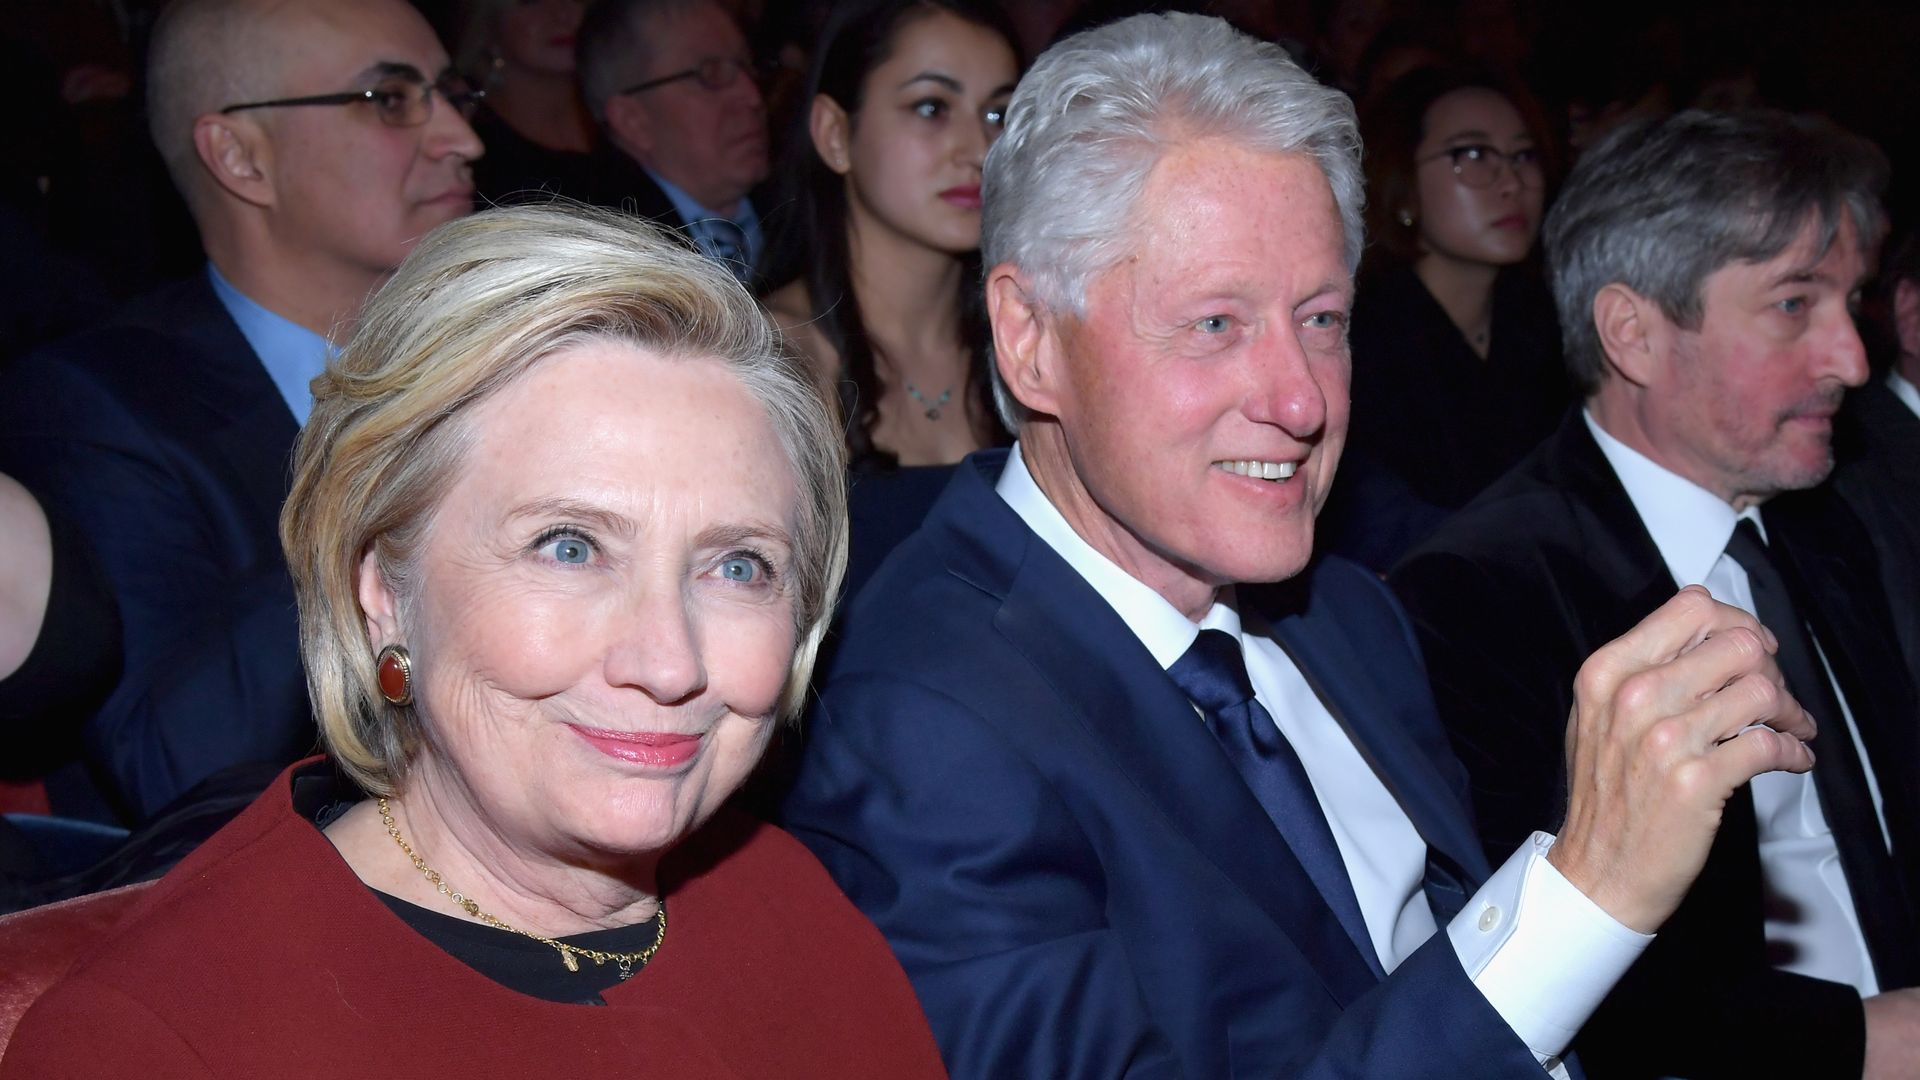 Hillary and Bill Clinton at an awards show